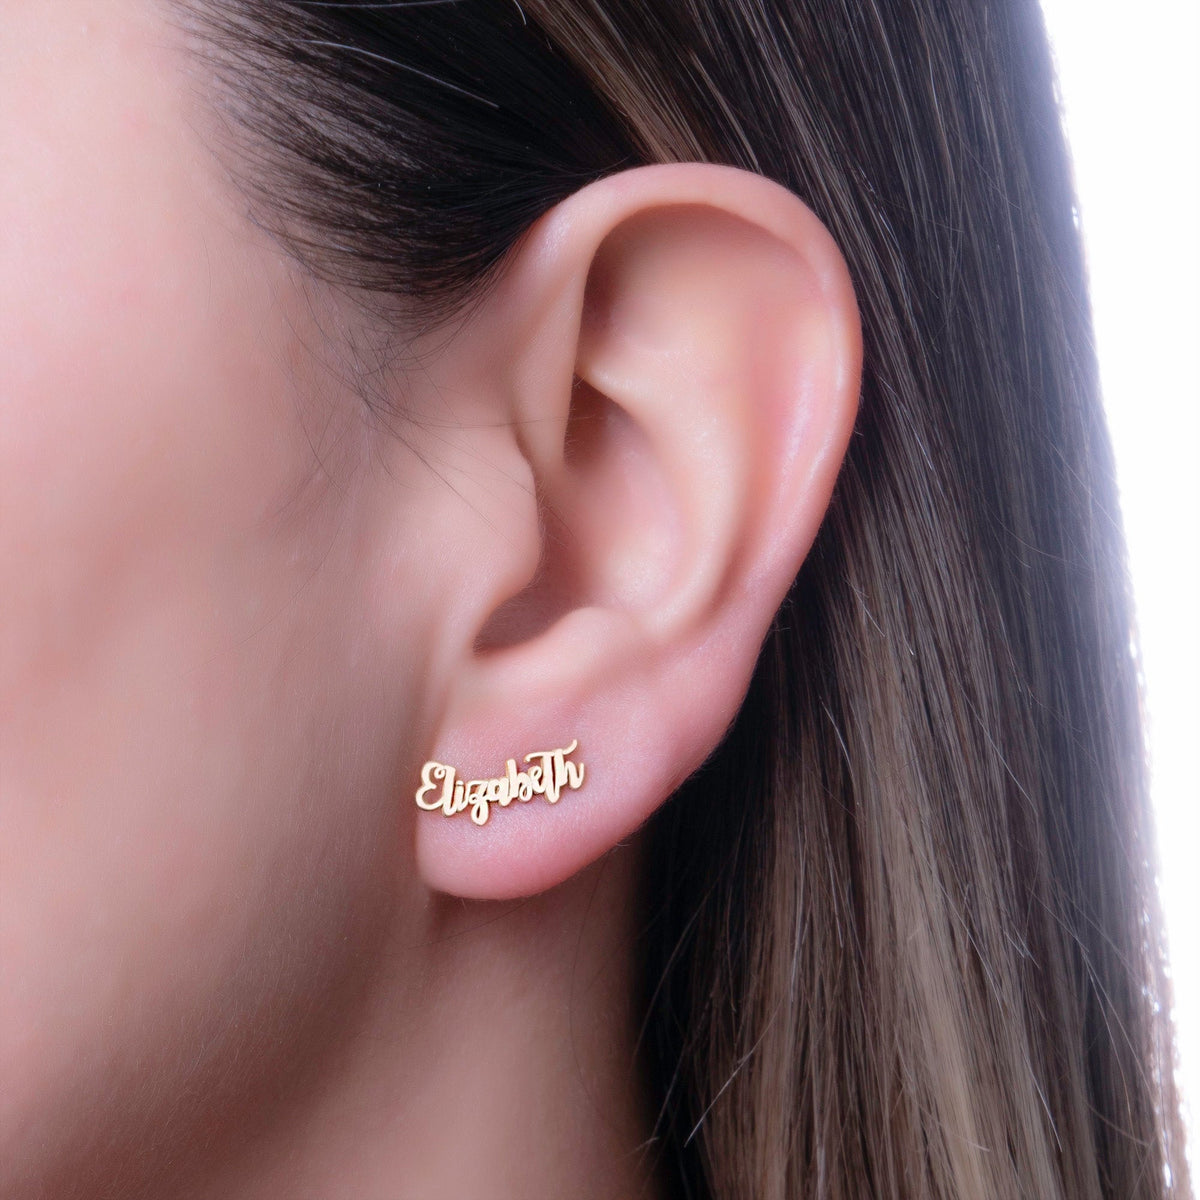 Personalized Name Earrings Silver, Custom Stud Handmade Name Earrings Gold • Dainty Earrings Gift For Her